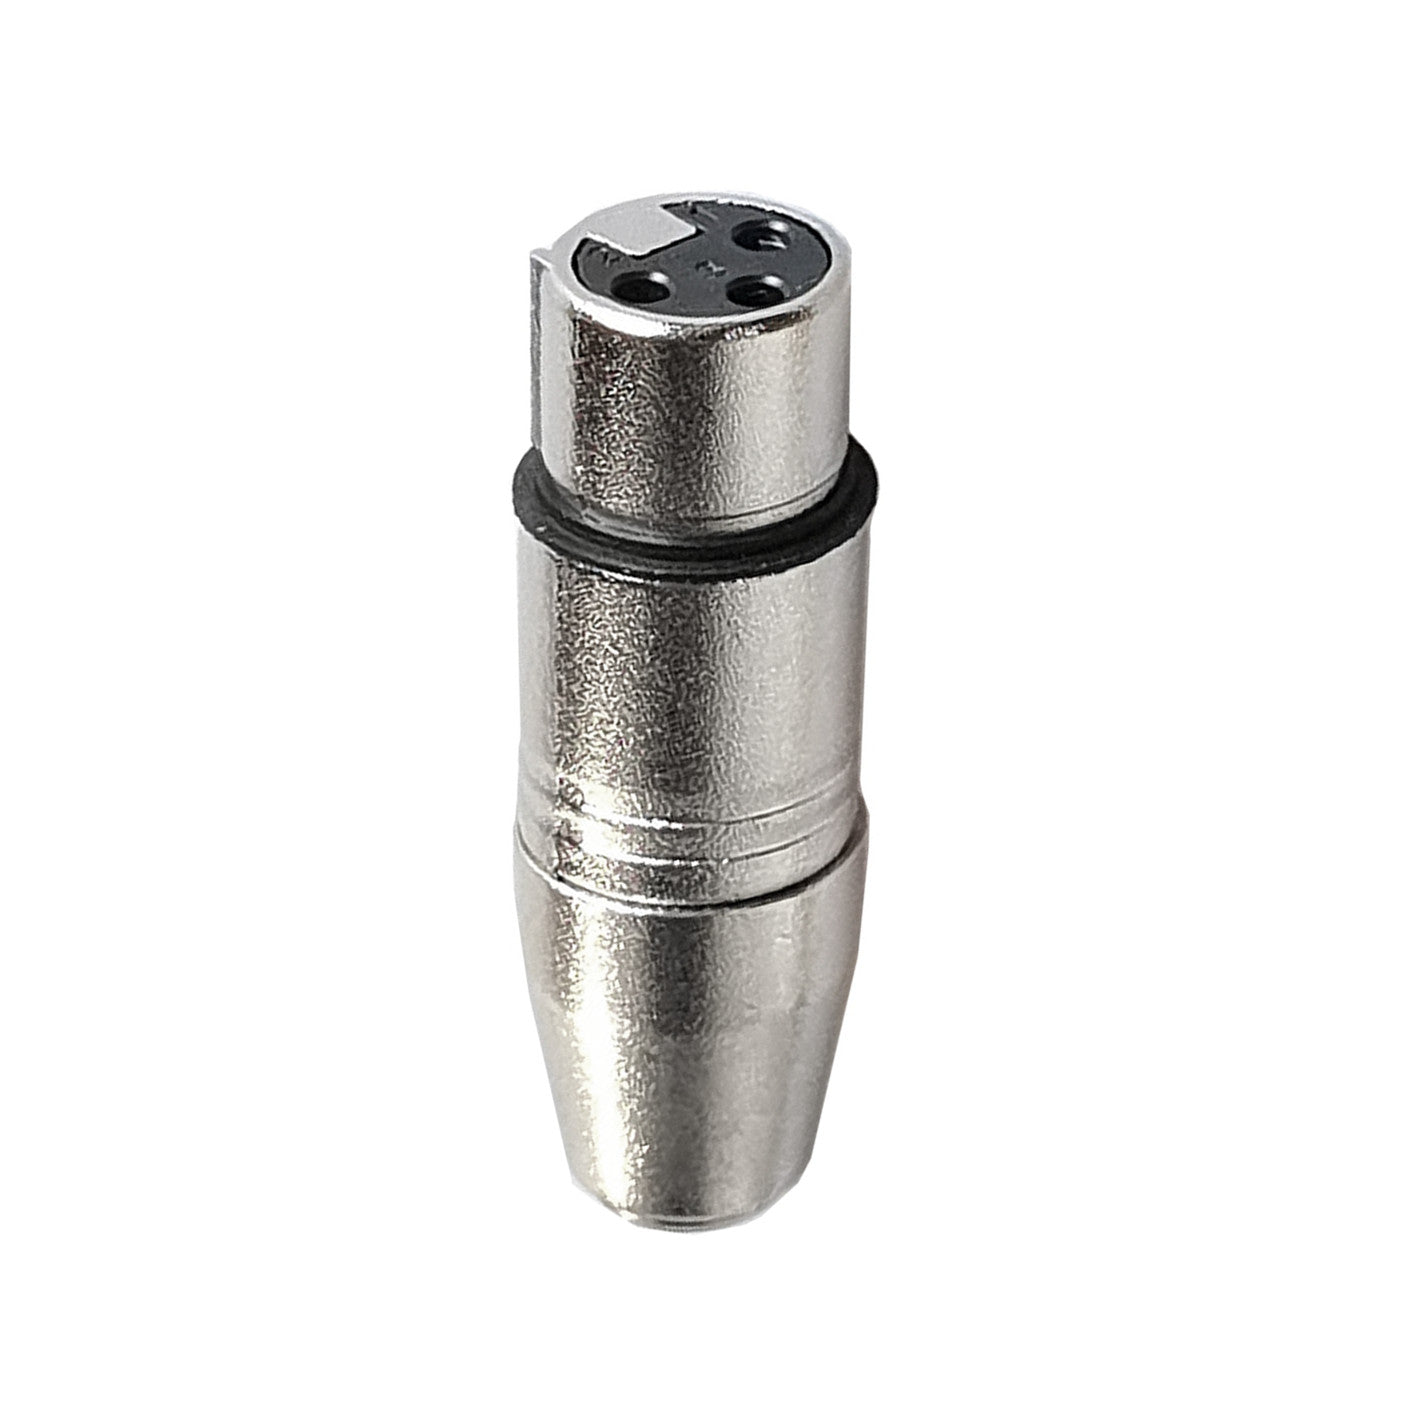 XLR 3-Pin Female to Mini XLR 3-Pin Male Audio Microphone Adapter